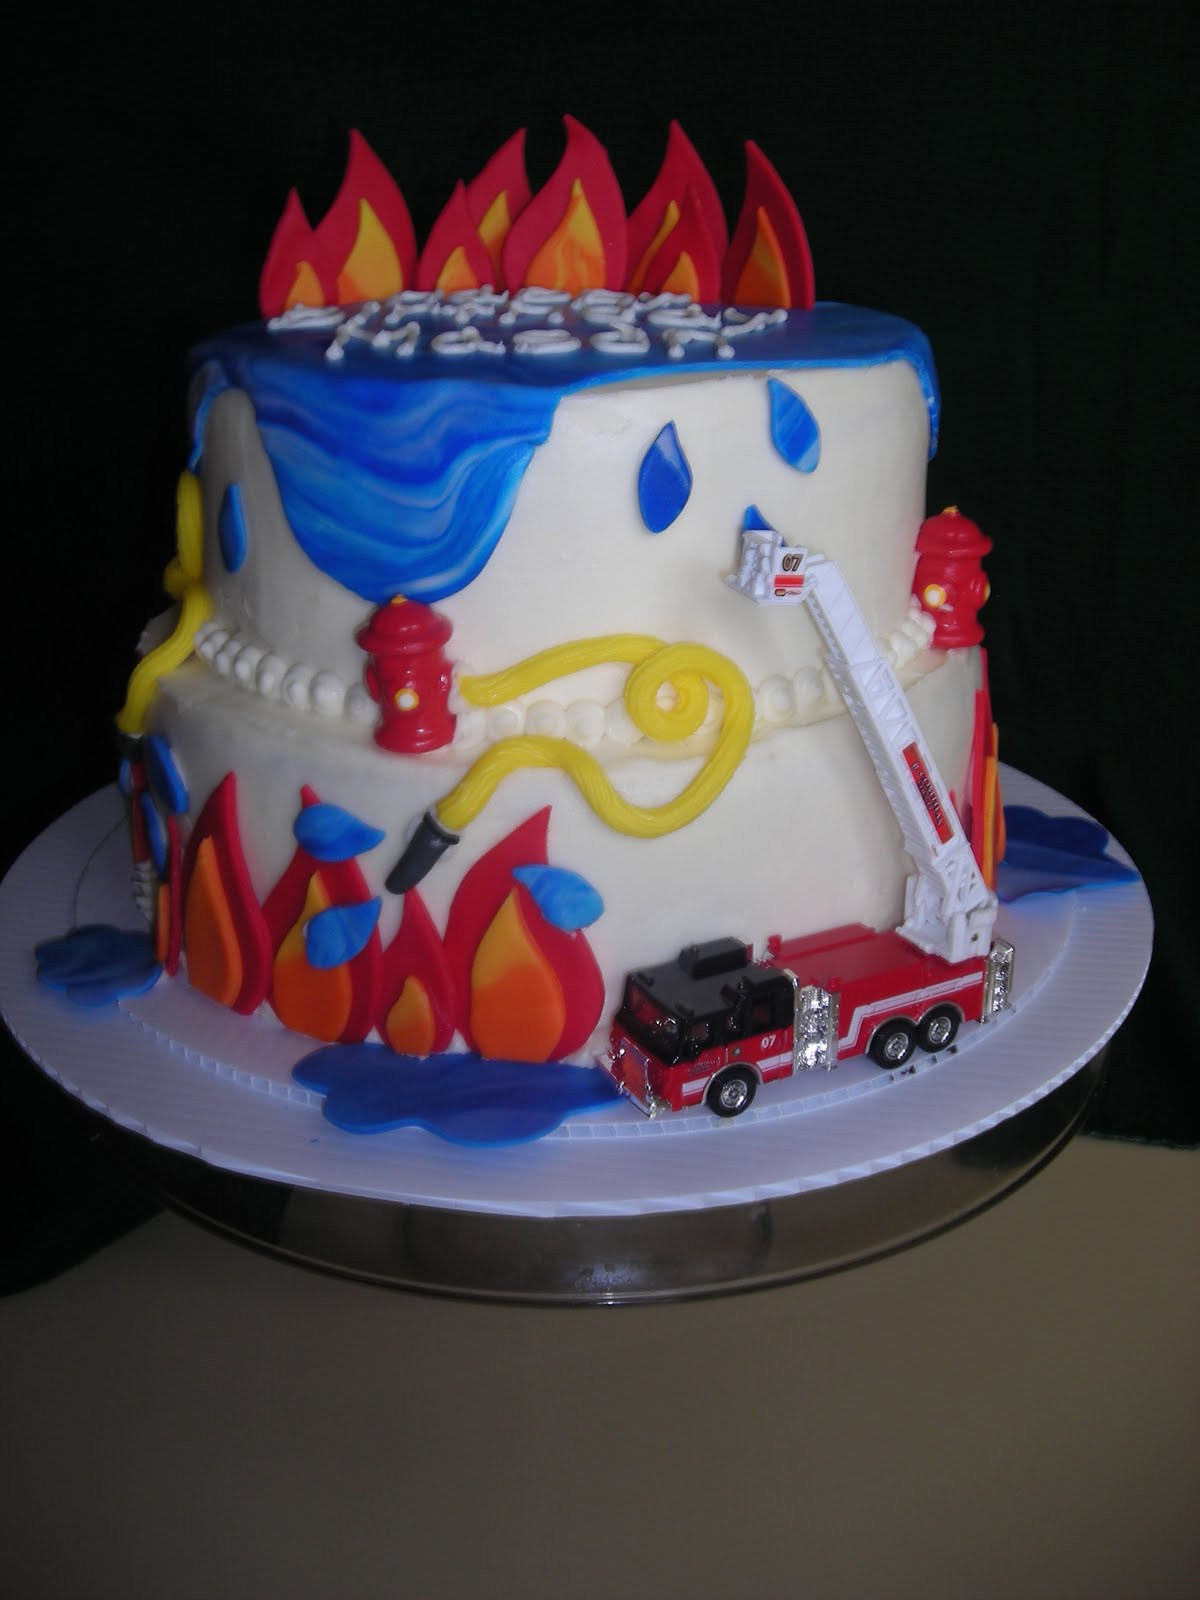 Best ideas about Birthday Cake Fire
. Save or Pin pattycakes Fireman Theme Birthday Cake Now.